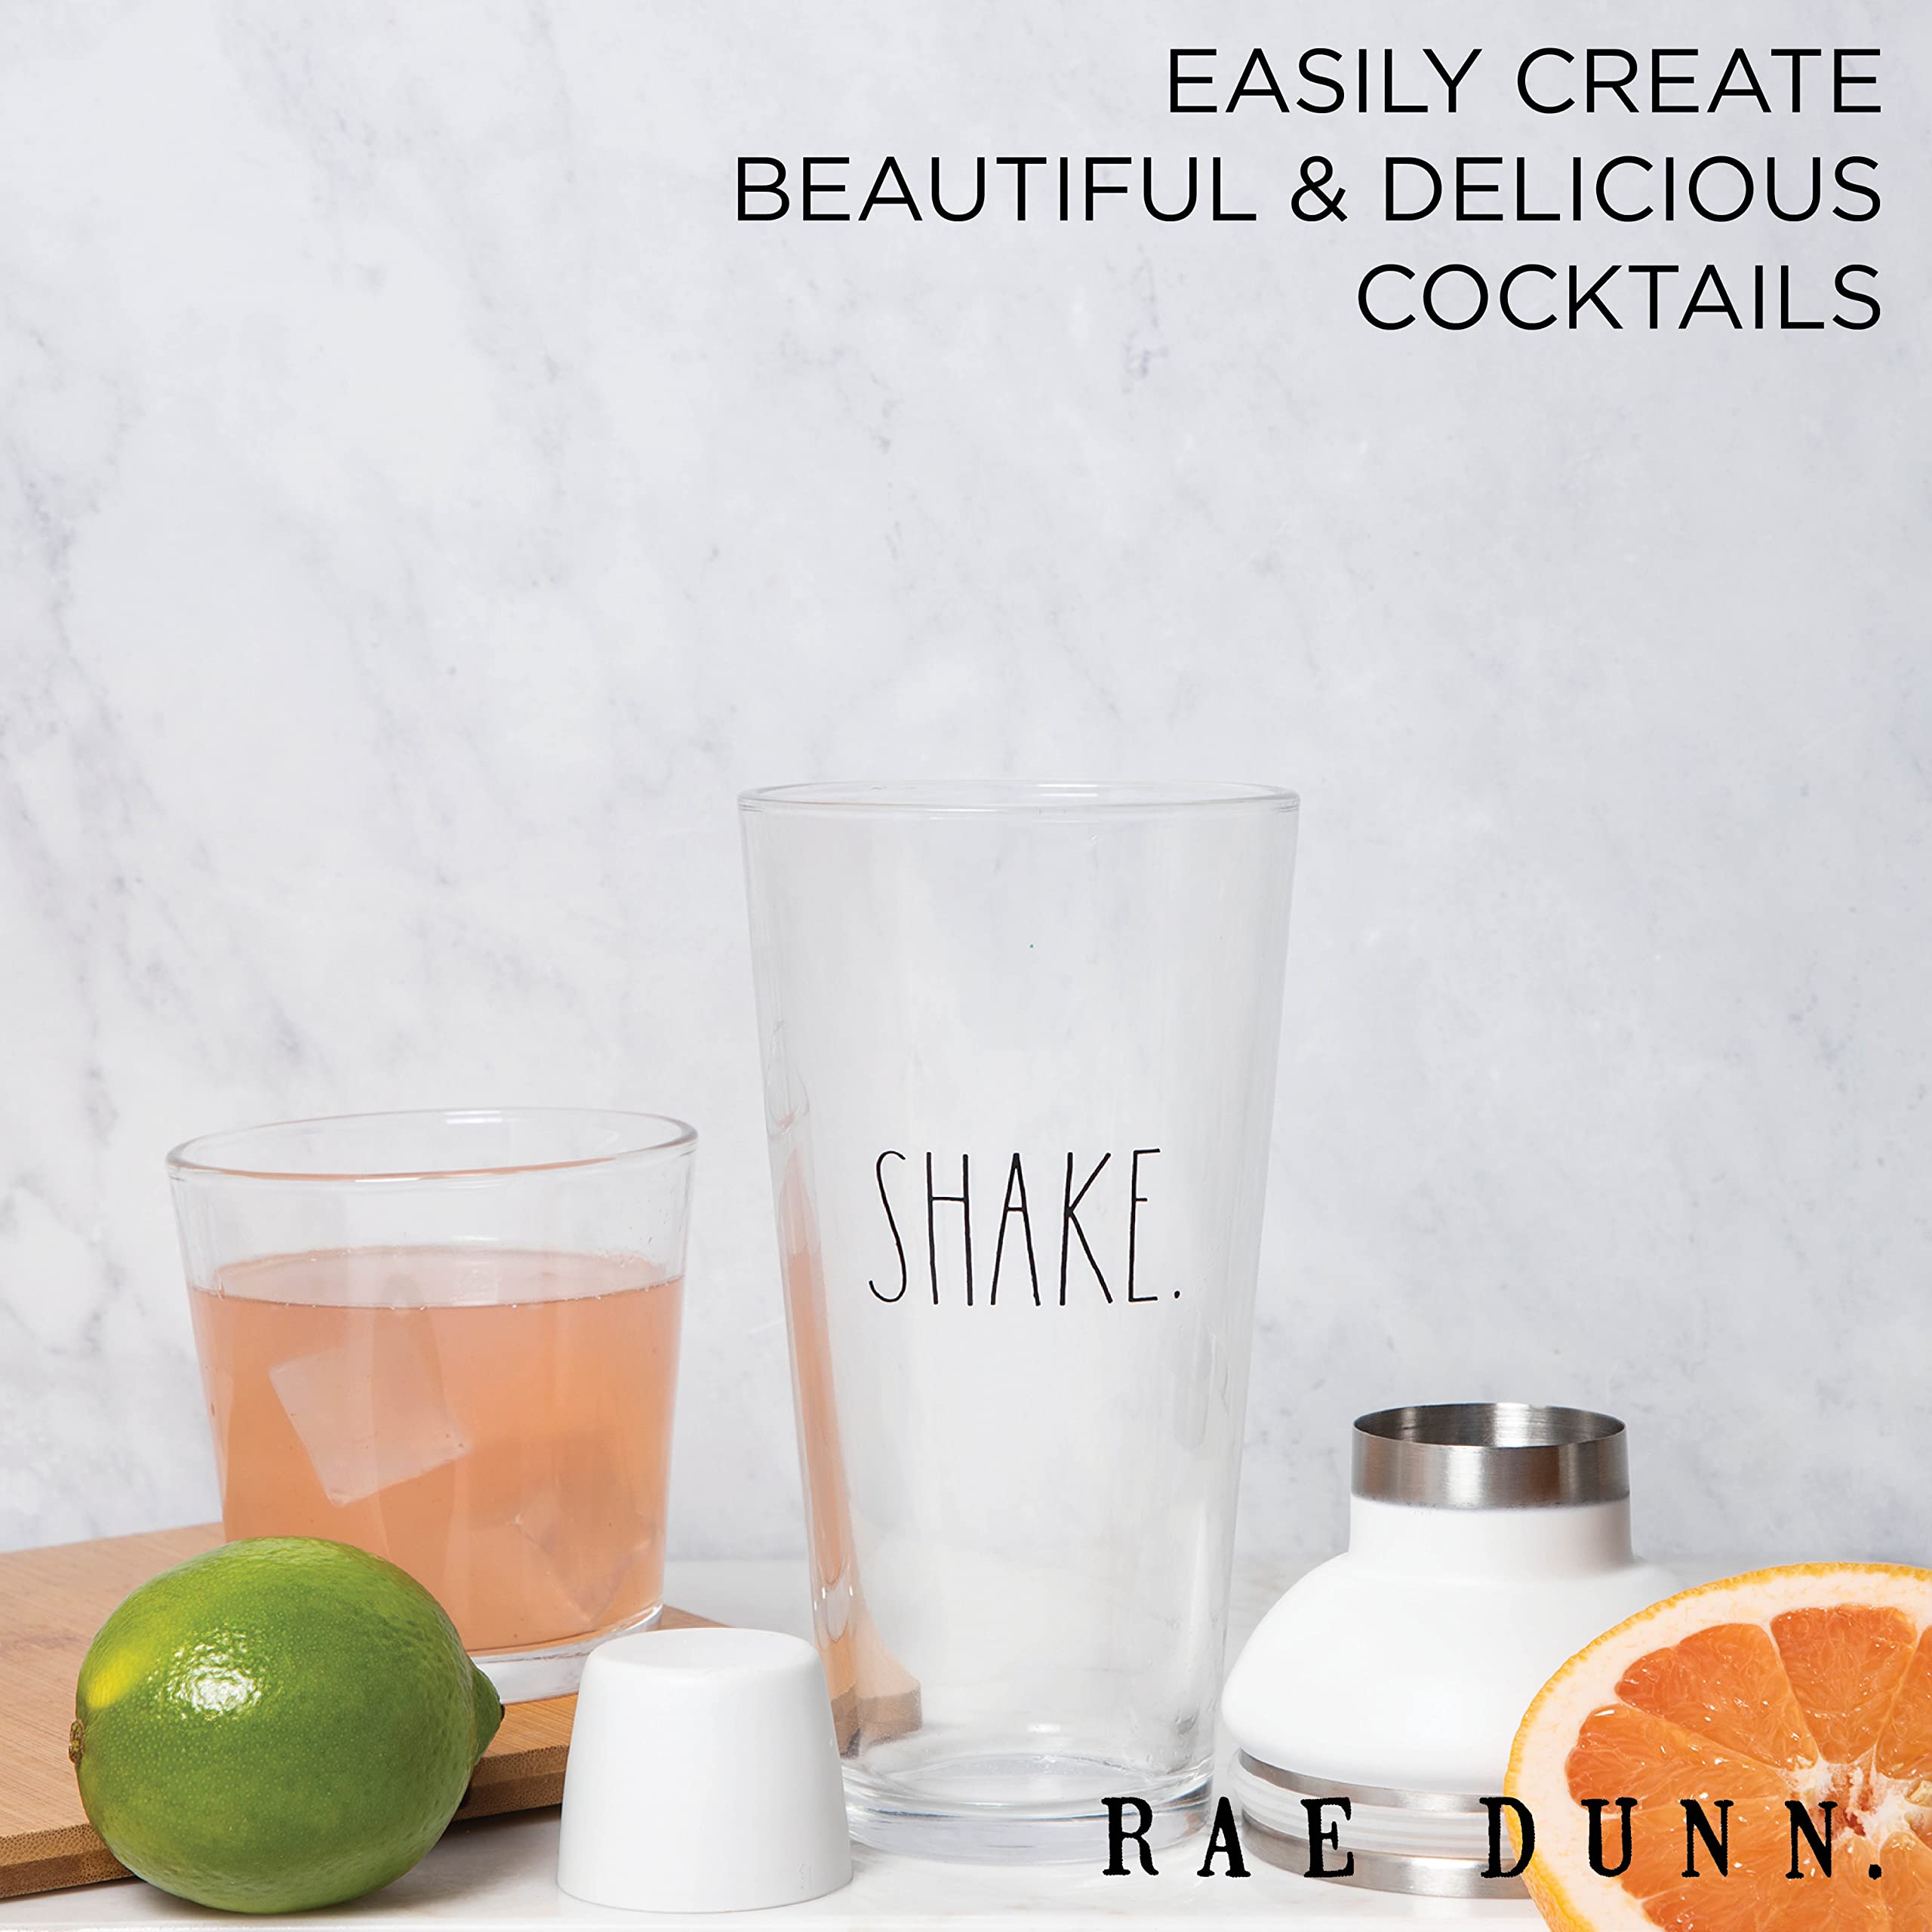 Rae Dunn Glass Cocktail Shaker - Martini Shaker for Drinks - 23 OZ Capacity Glass Margarita Shaker for at Home Bar, Entertaining and Parties (White)